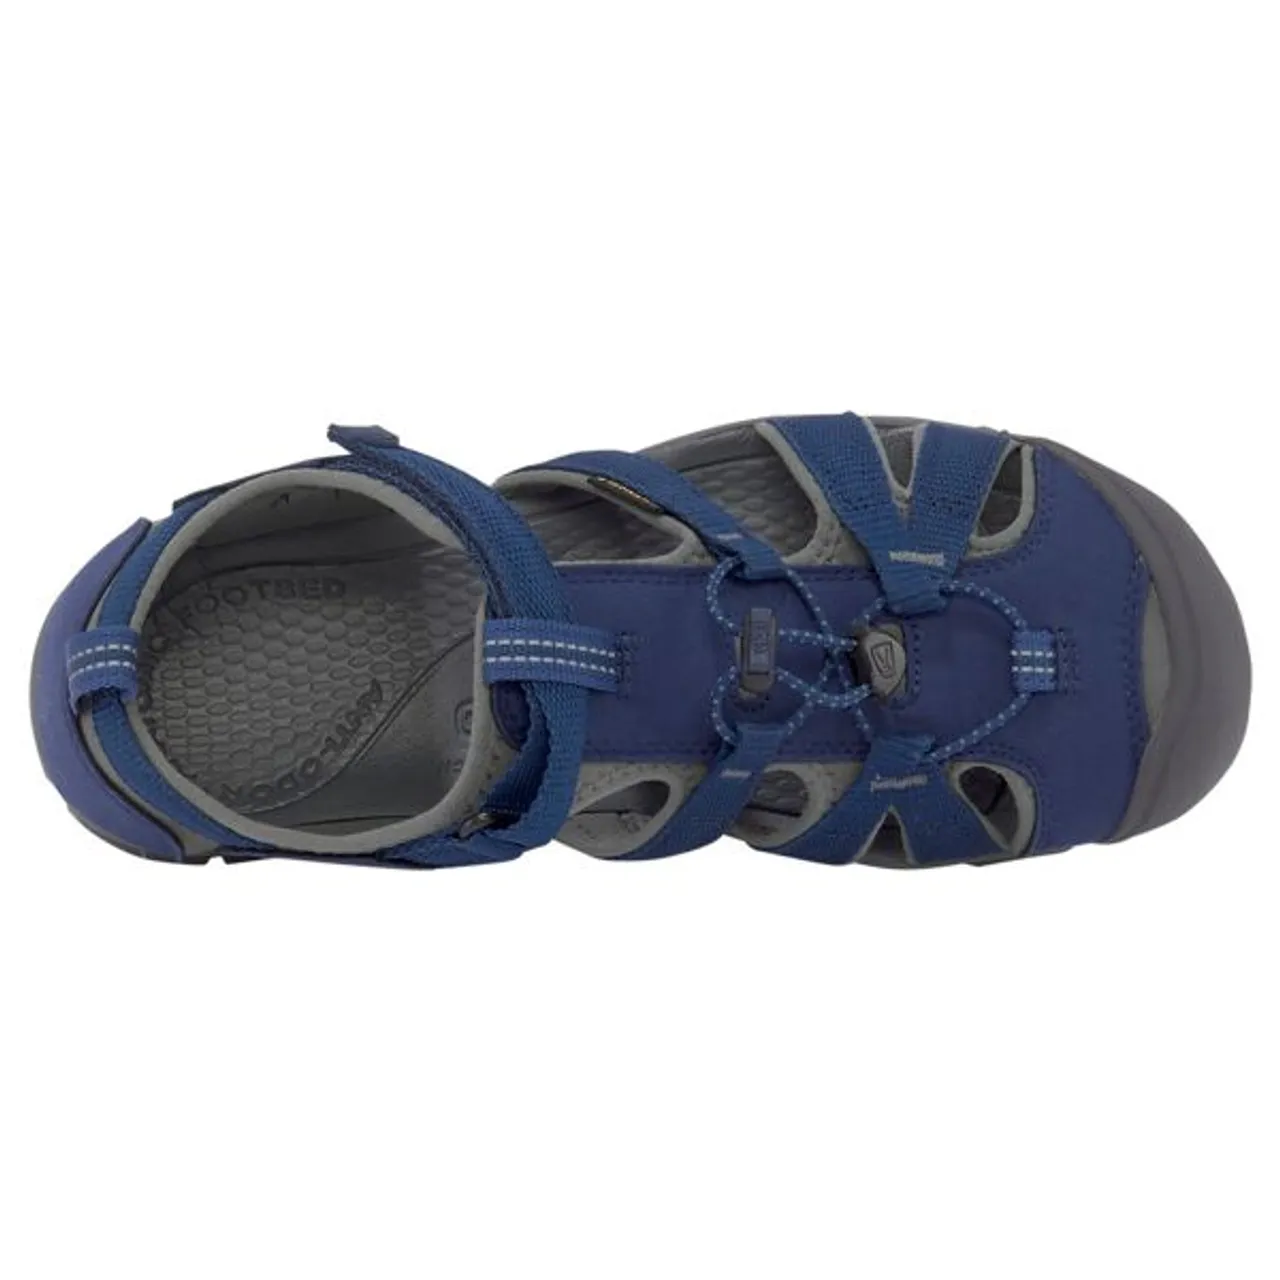 Sandale KEEN "SEACAMP II CNX" Gr. 38, blau (marine, grau) Schuhe